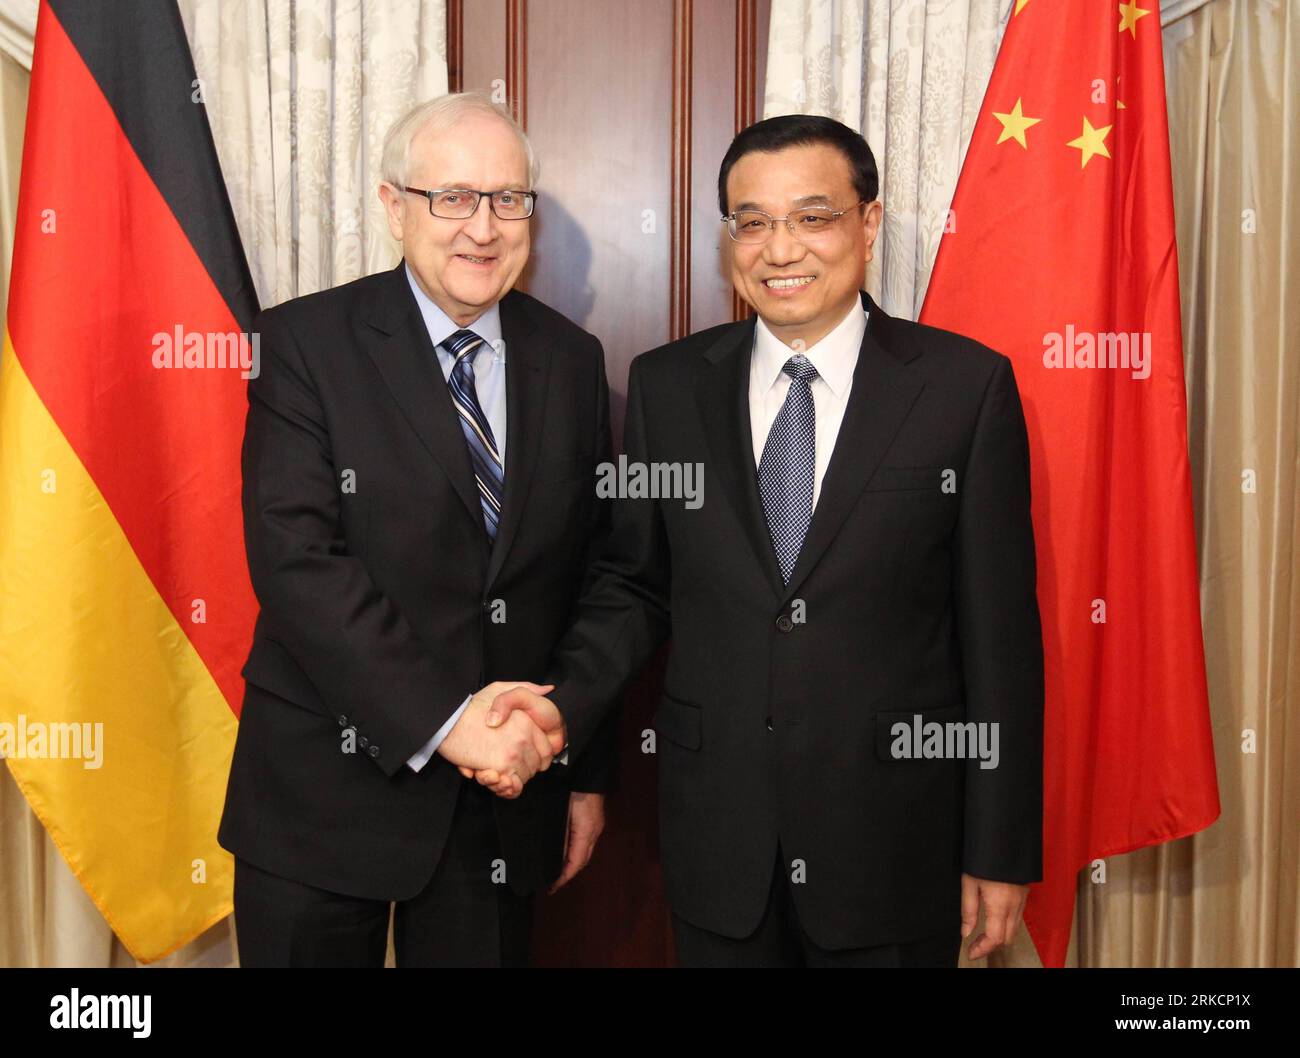 110106 -- BERLIN, Jan. 6, 2011 Xinhua -- Chinese Vice Premier Li Keqiang R shakes hands with German Economy Minister Rainer Brüderle in Berlin, Germany, Jan. 6, 2011. Xinhua/Ding Linwyo GERMANY-CHINA-LI KEQIANG-MEETING PUBLICATIONxNOTxINxCHN Stock Photo